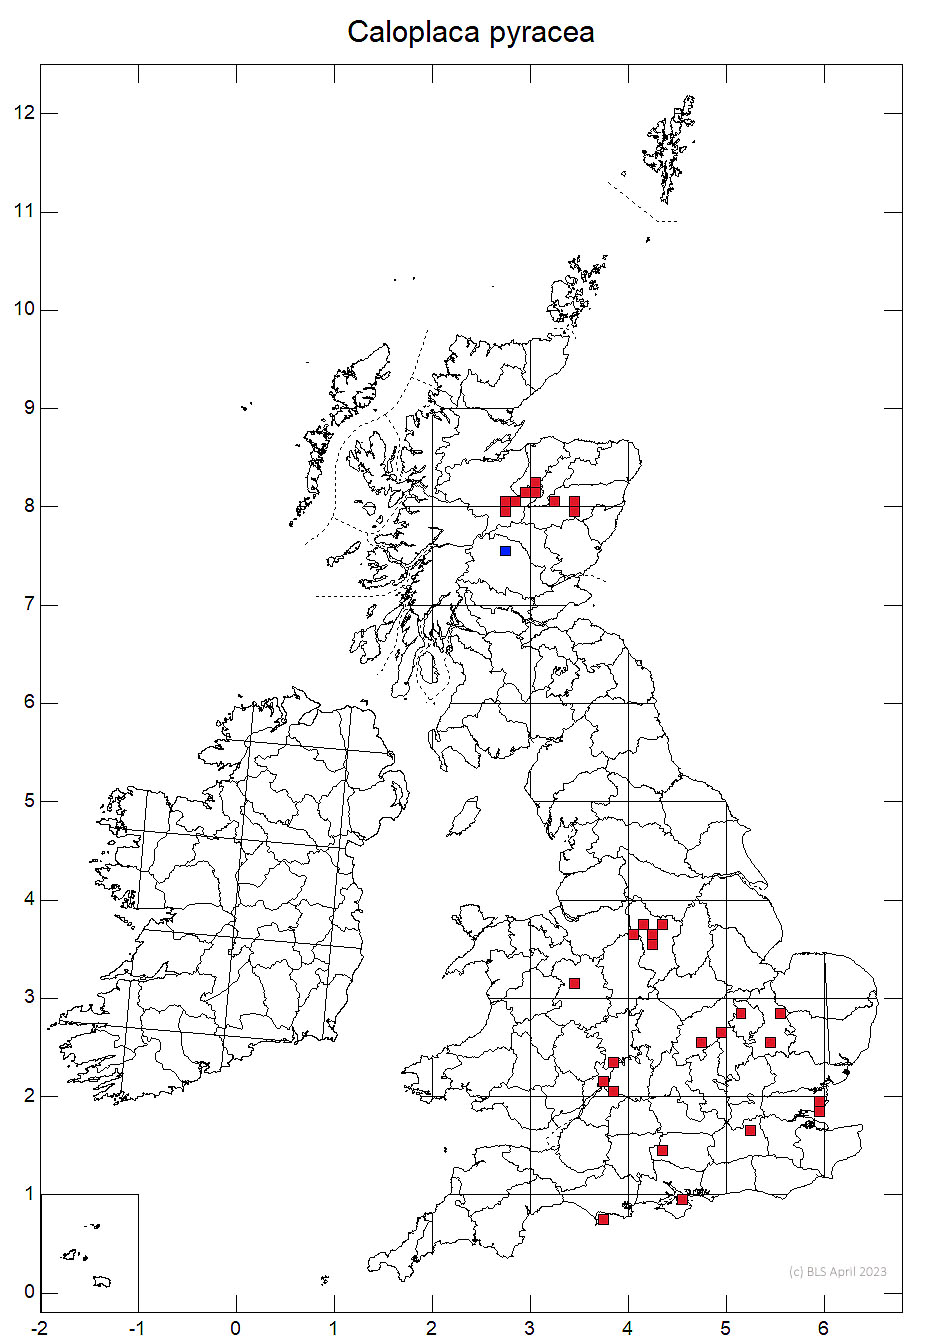 Caloplaca pyracea 10km sq distribution map